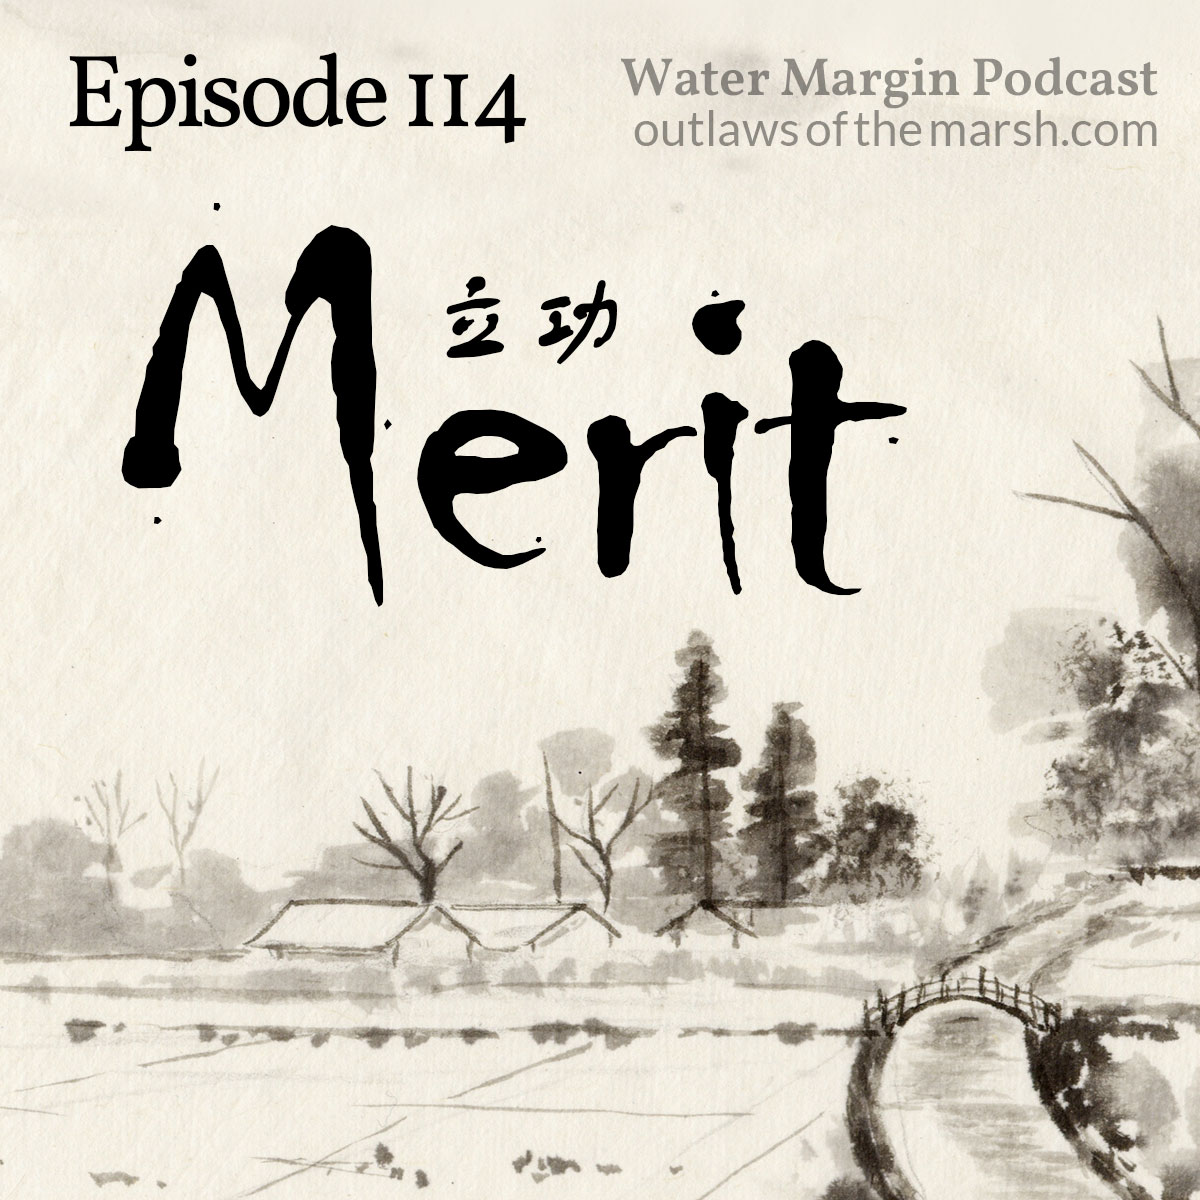 Water Margin Podcast: Episode 114